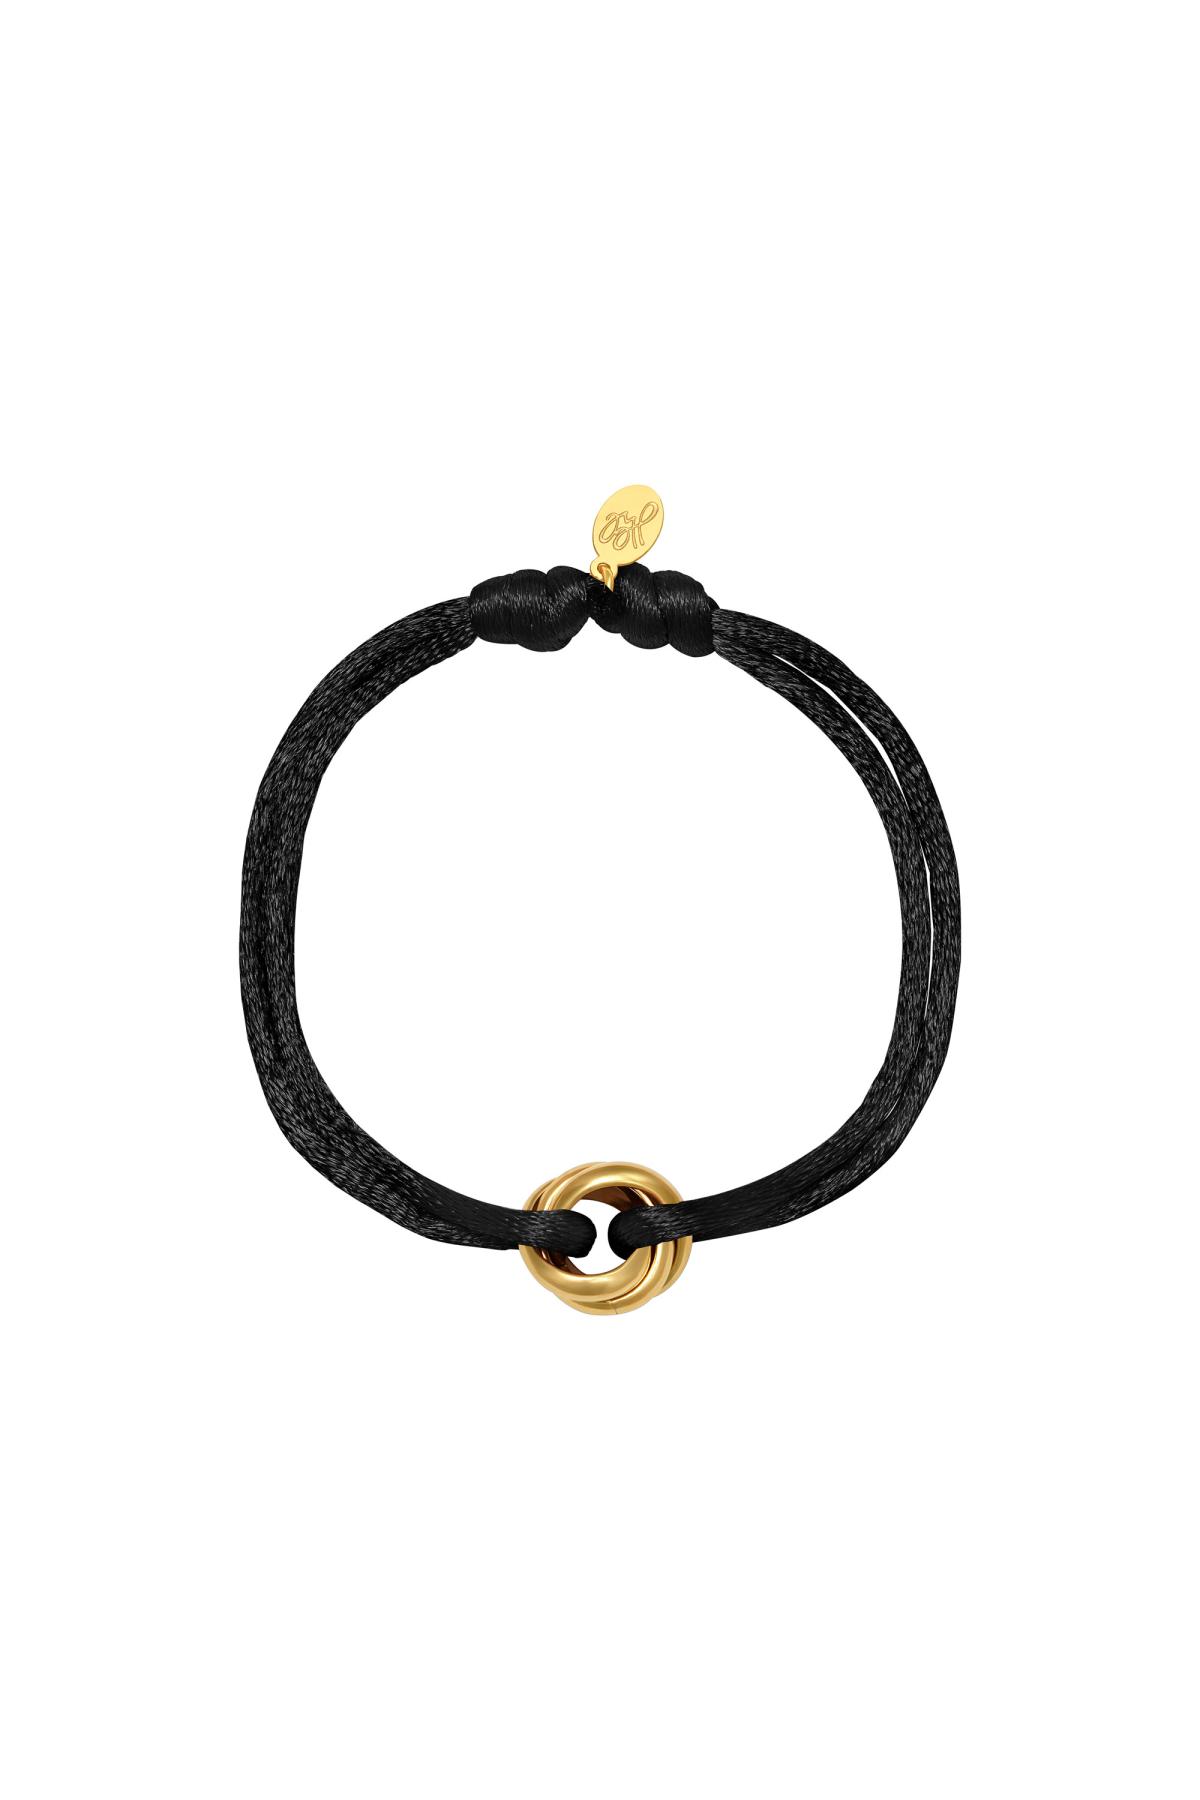 Black & Gold / Bracelet Satin Knot Black & Gold Stainless Steel 